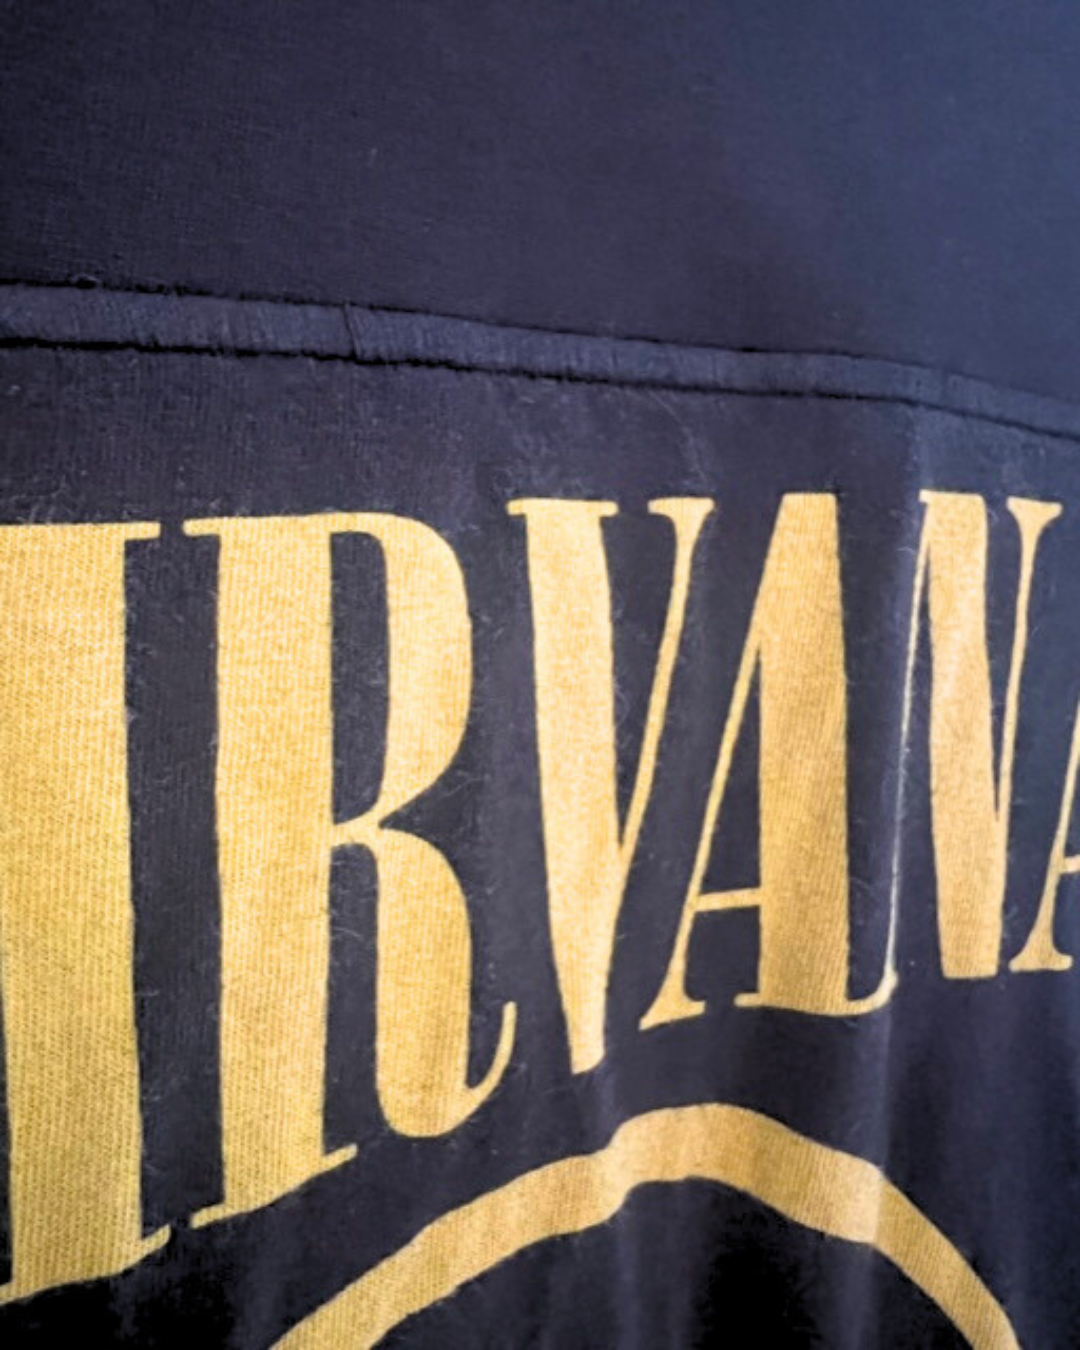 Vintage NIRVANA Band panel T-shirt